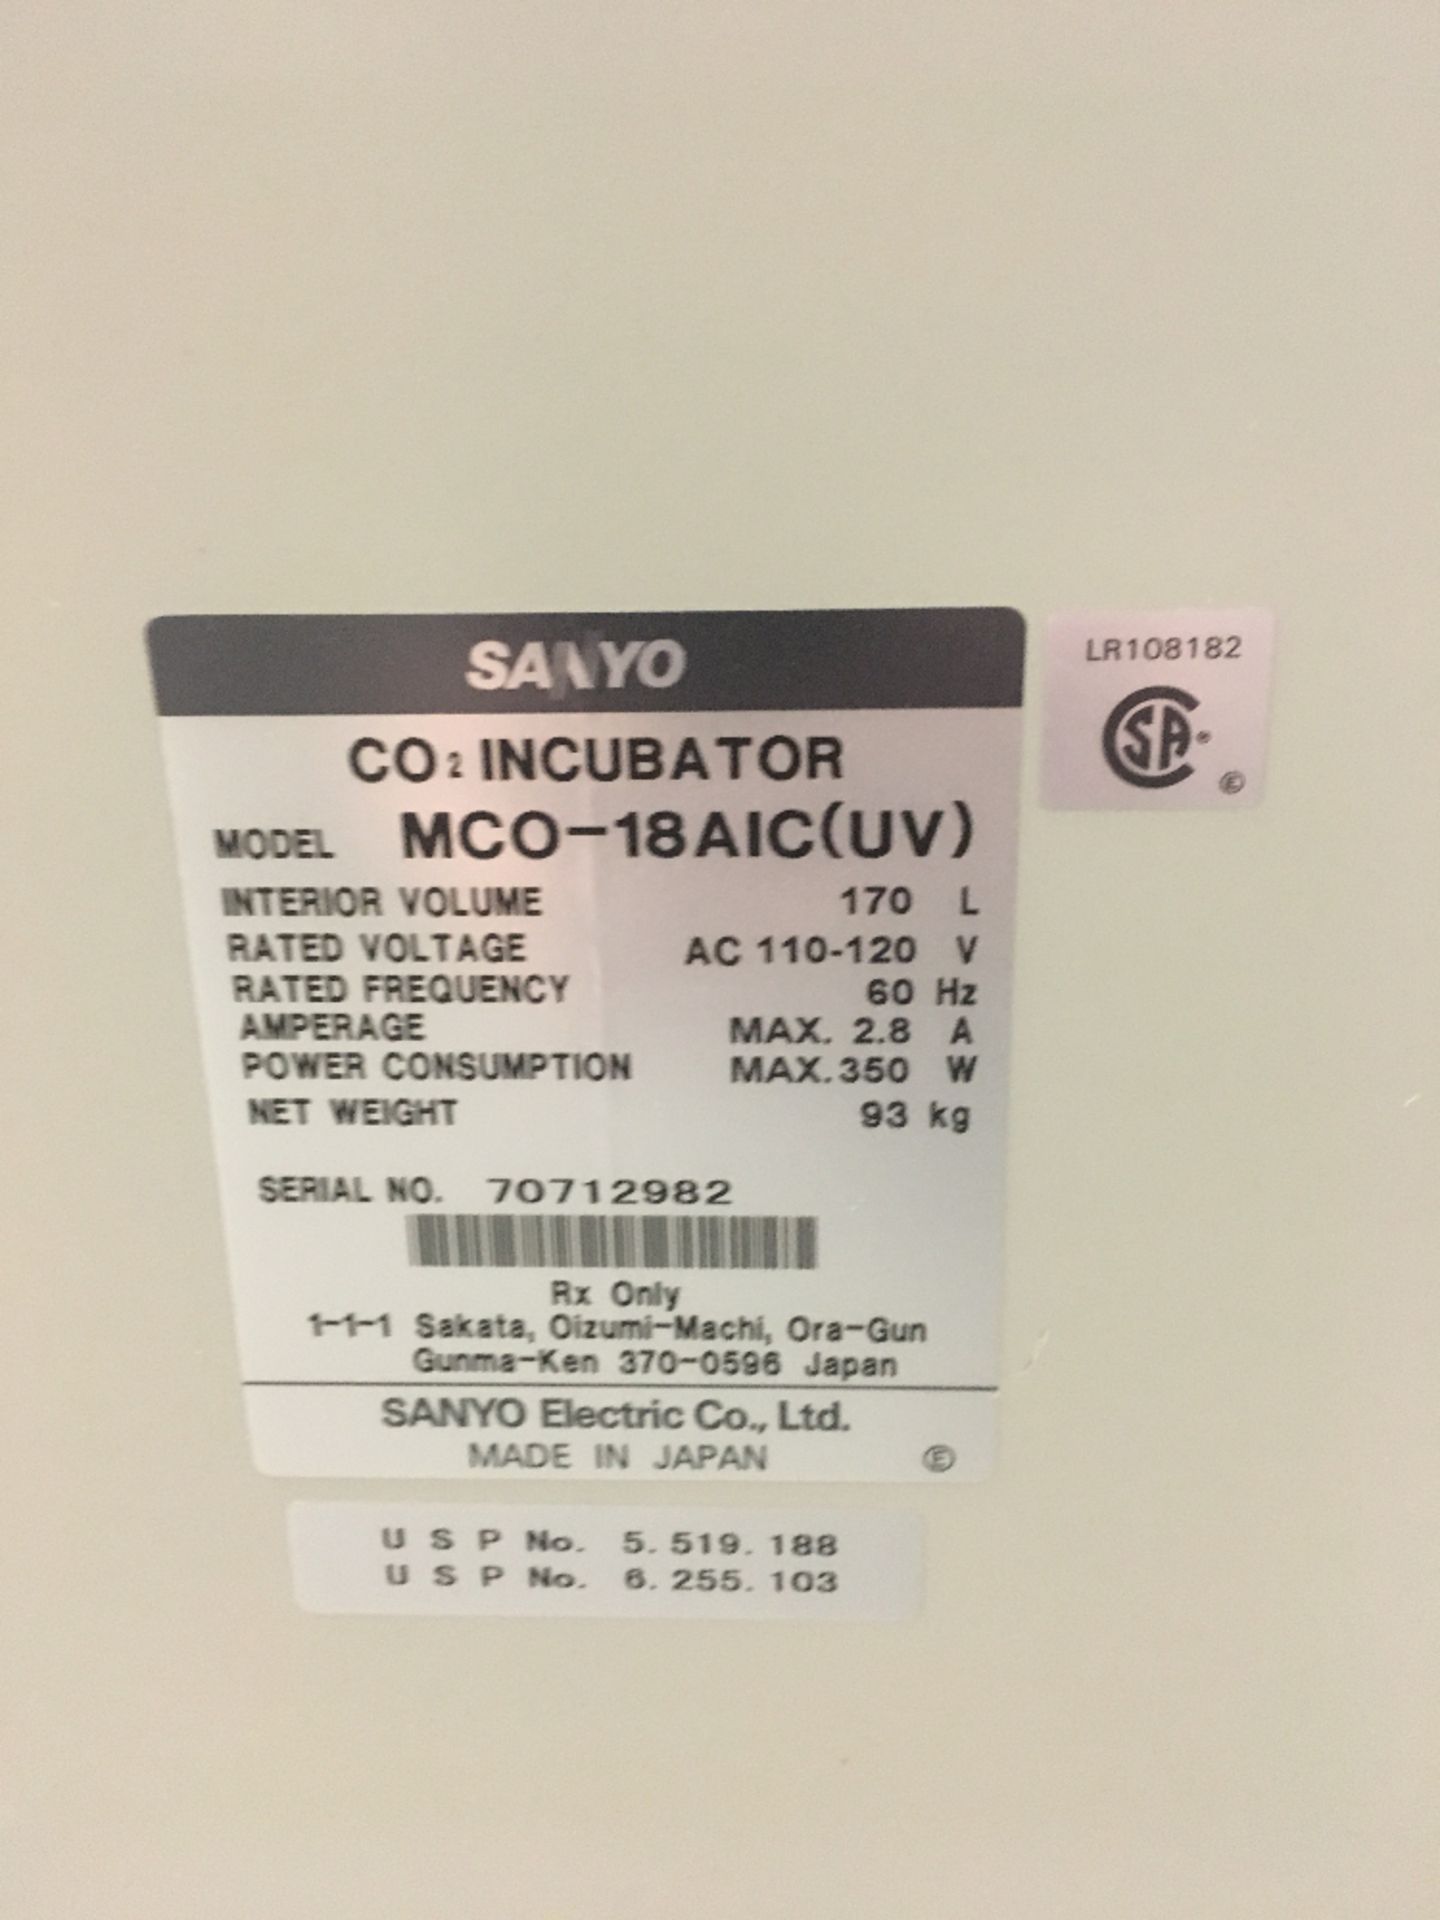 Sanyo MCO-18AIC (UV) CO2 Incubator - Image 2 of 3